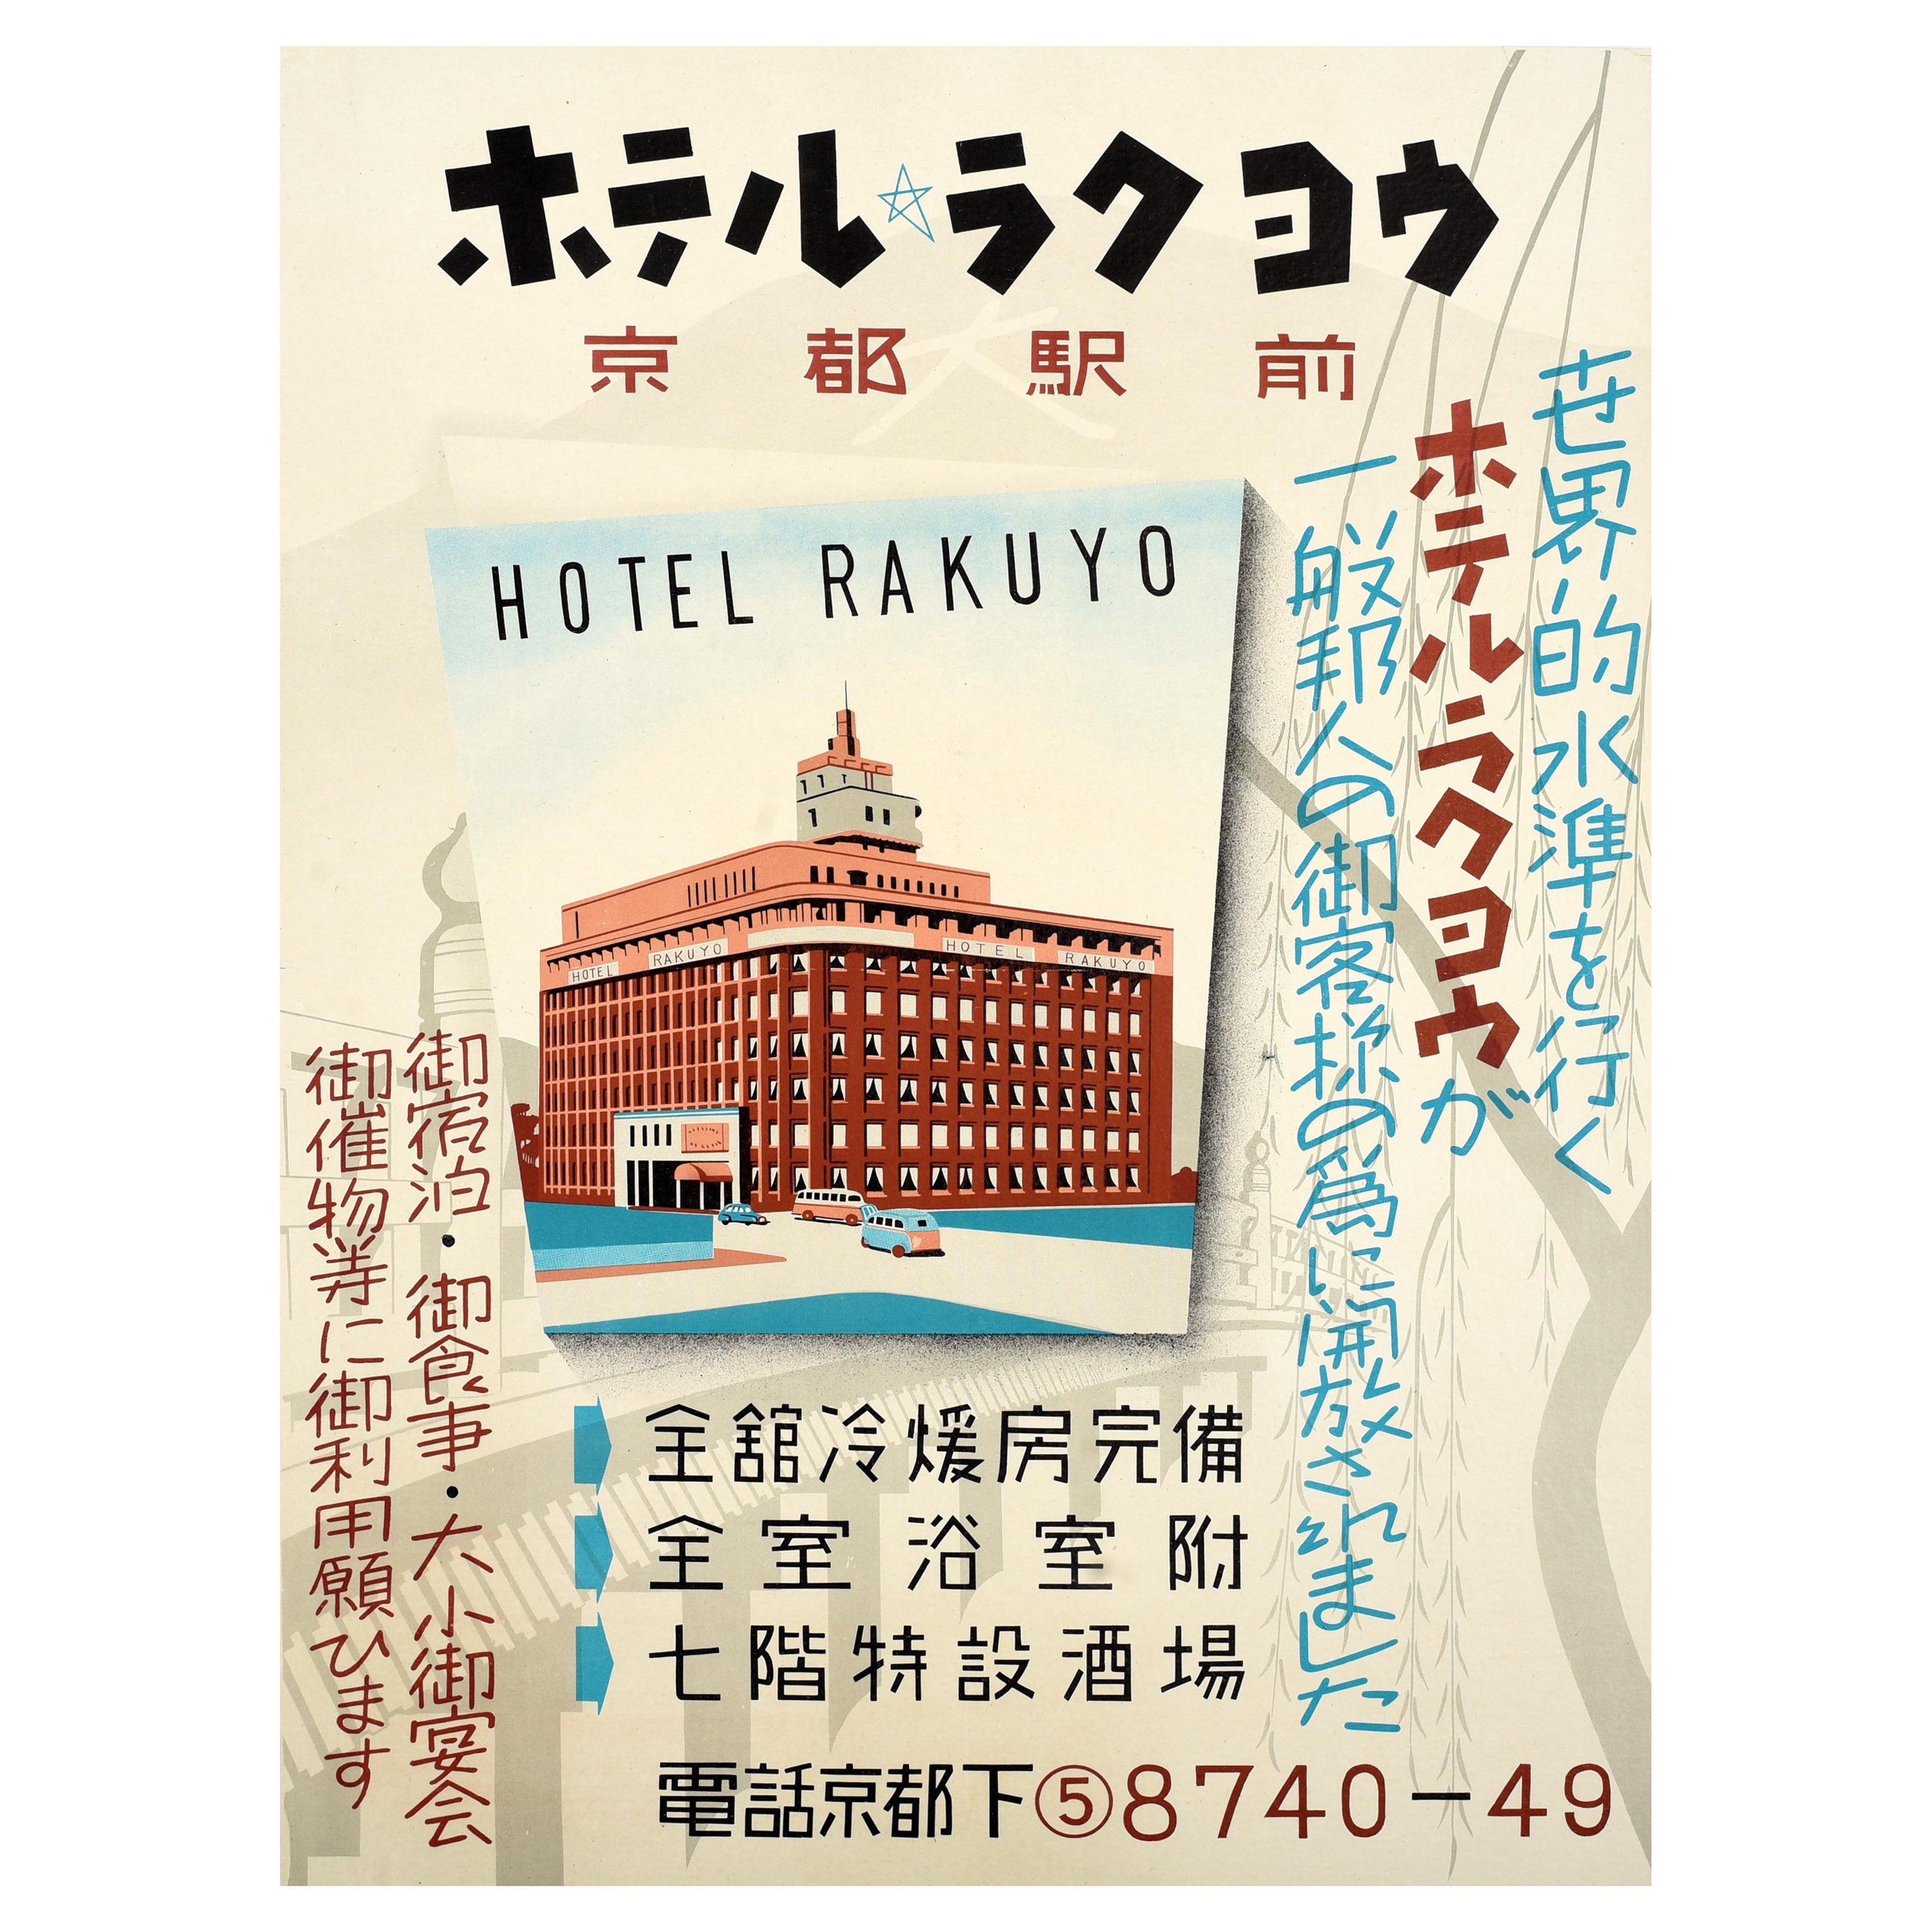 Original Vintage Japanese Travel Poster Hotel Rakuyo Kyoto Station Japan Asia For Sale